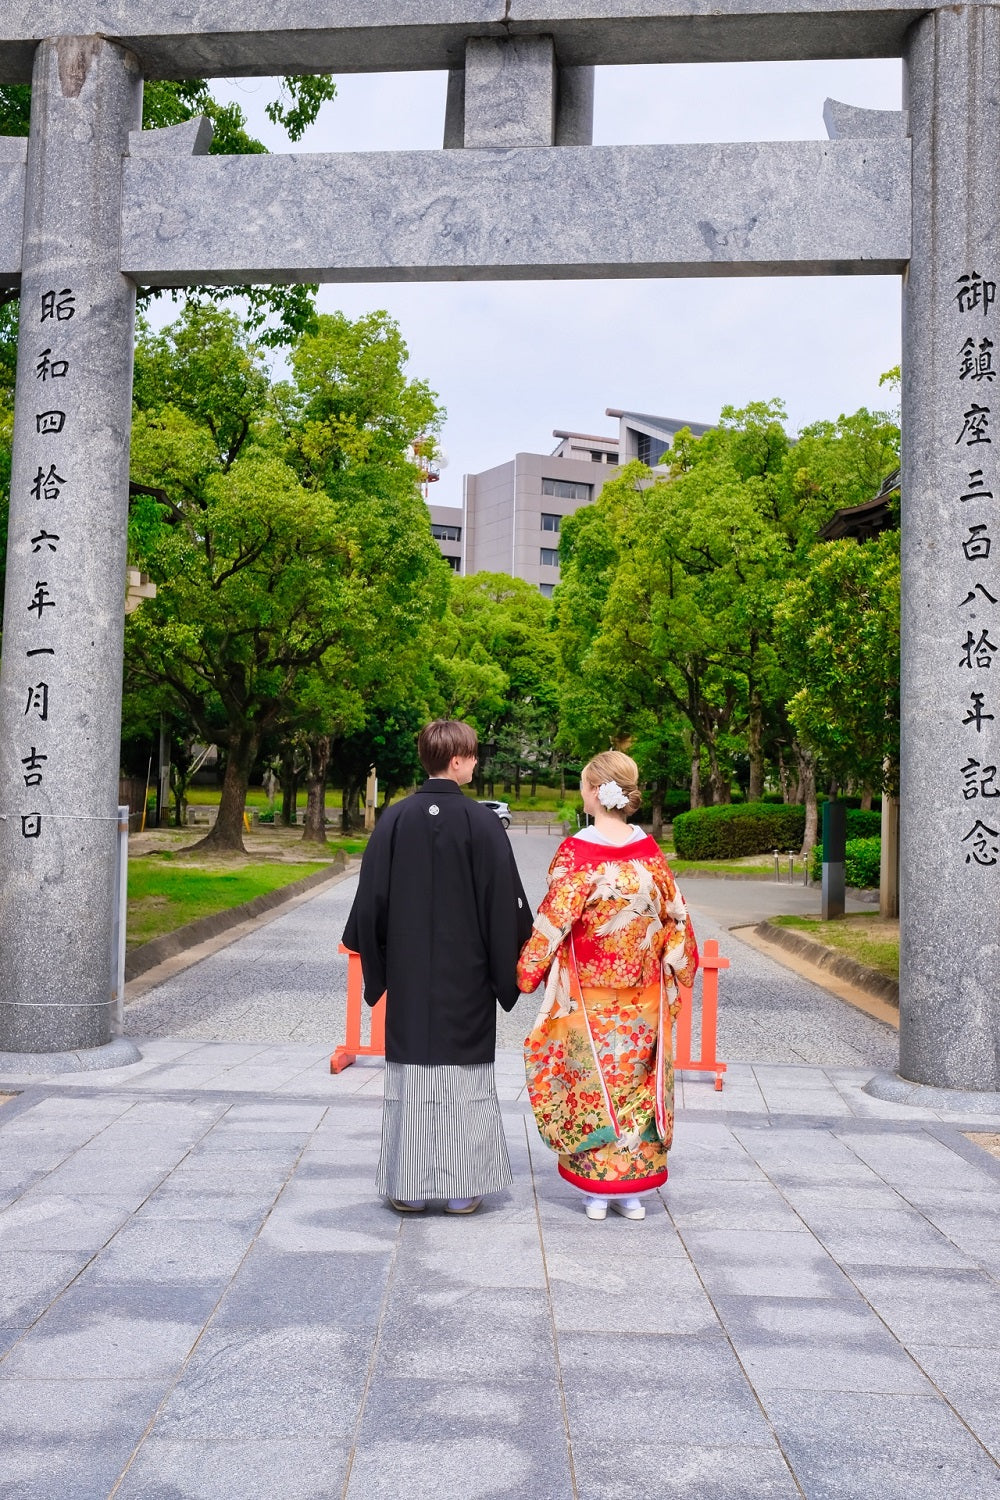 Shinan celebrates Chinese, western wedding culture